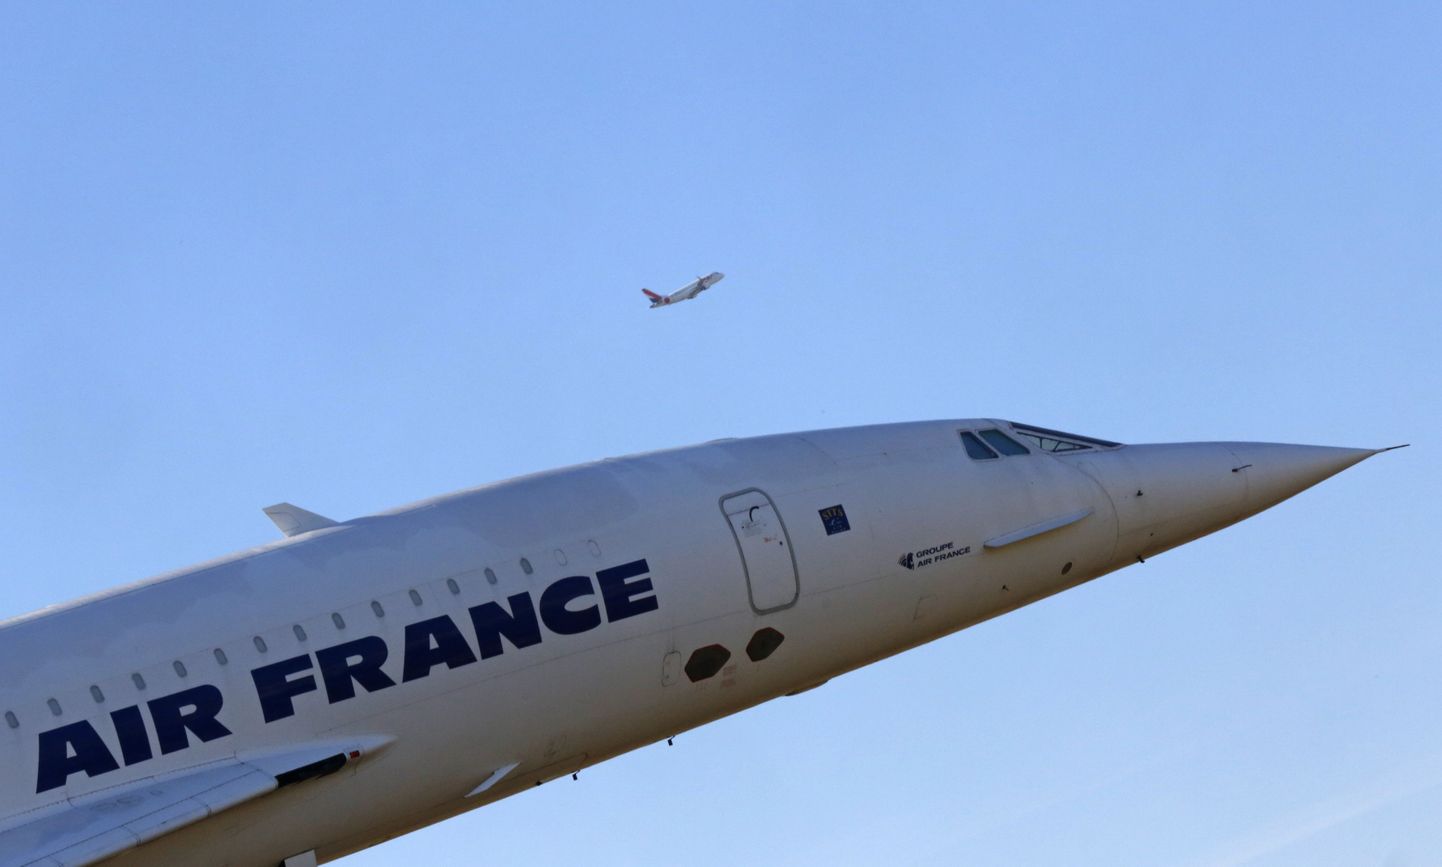 Air France'i lennuk Concorde